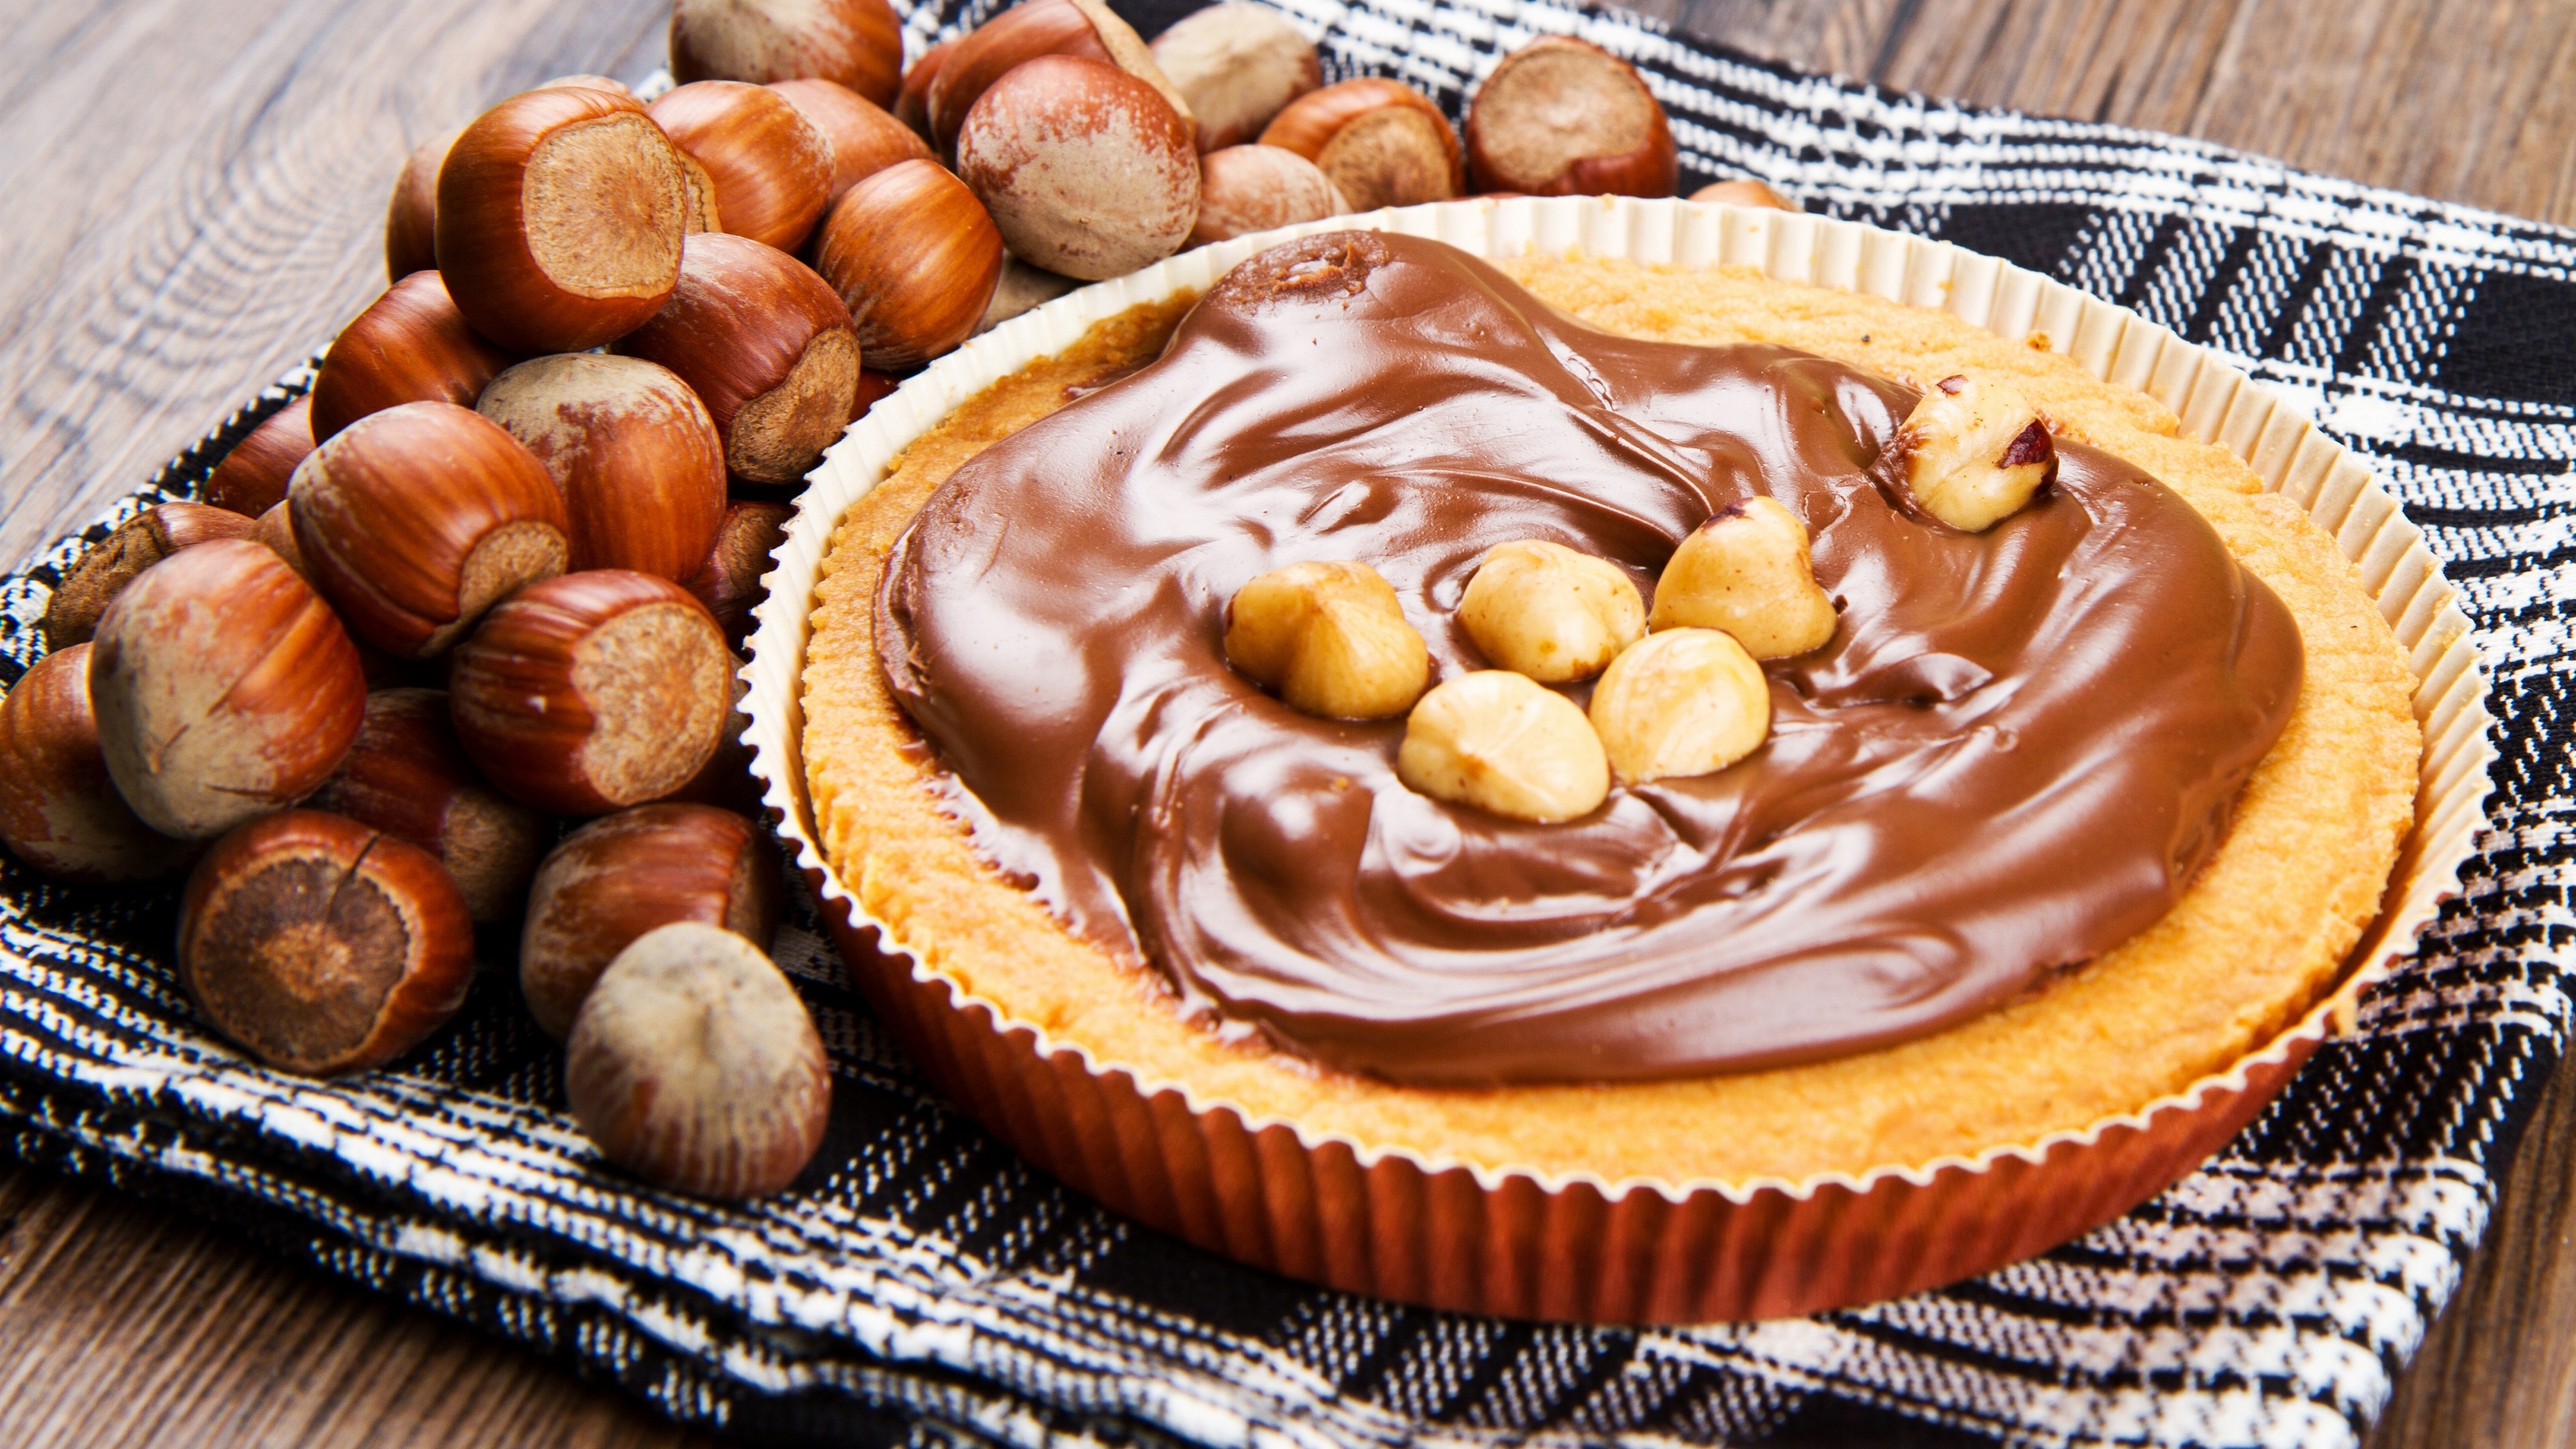 Pie: Hazelnut, Chocolate, Made of a pastry dough casing. 3840x2160 4K Wallpaper.